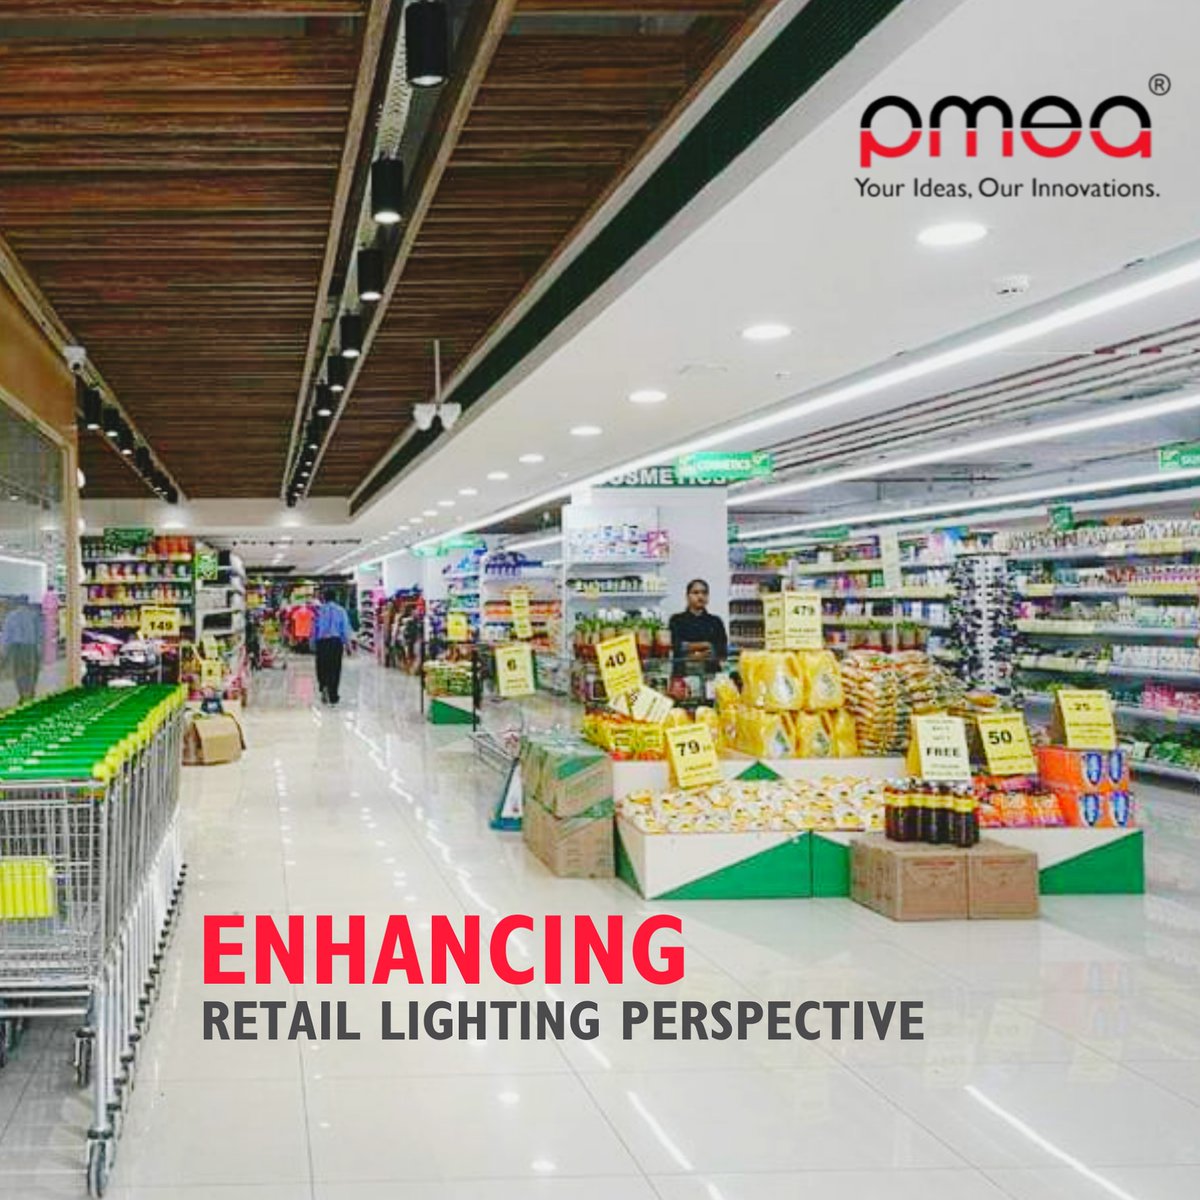 ENHANCING
Retail Lighting Perspective

PMEA - Your Ideas, Our Innovations.

Website: lighting.pmealtd.com

#Retaillighting  #Commerciallighting #ledlighting #PMEA #PMEAlighting #lighting  #lightingsolutions #lightingmanufacturer #lightingsupplier #retailinteriorlighting